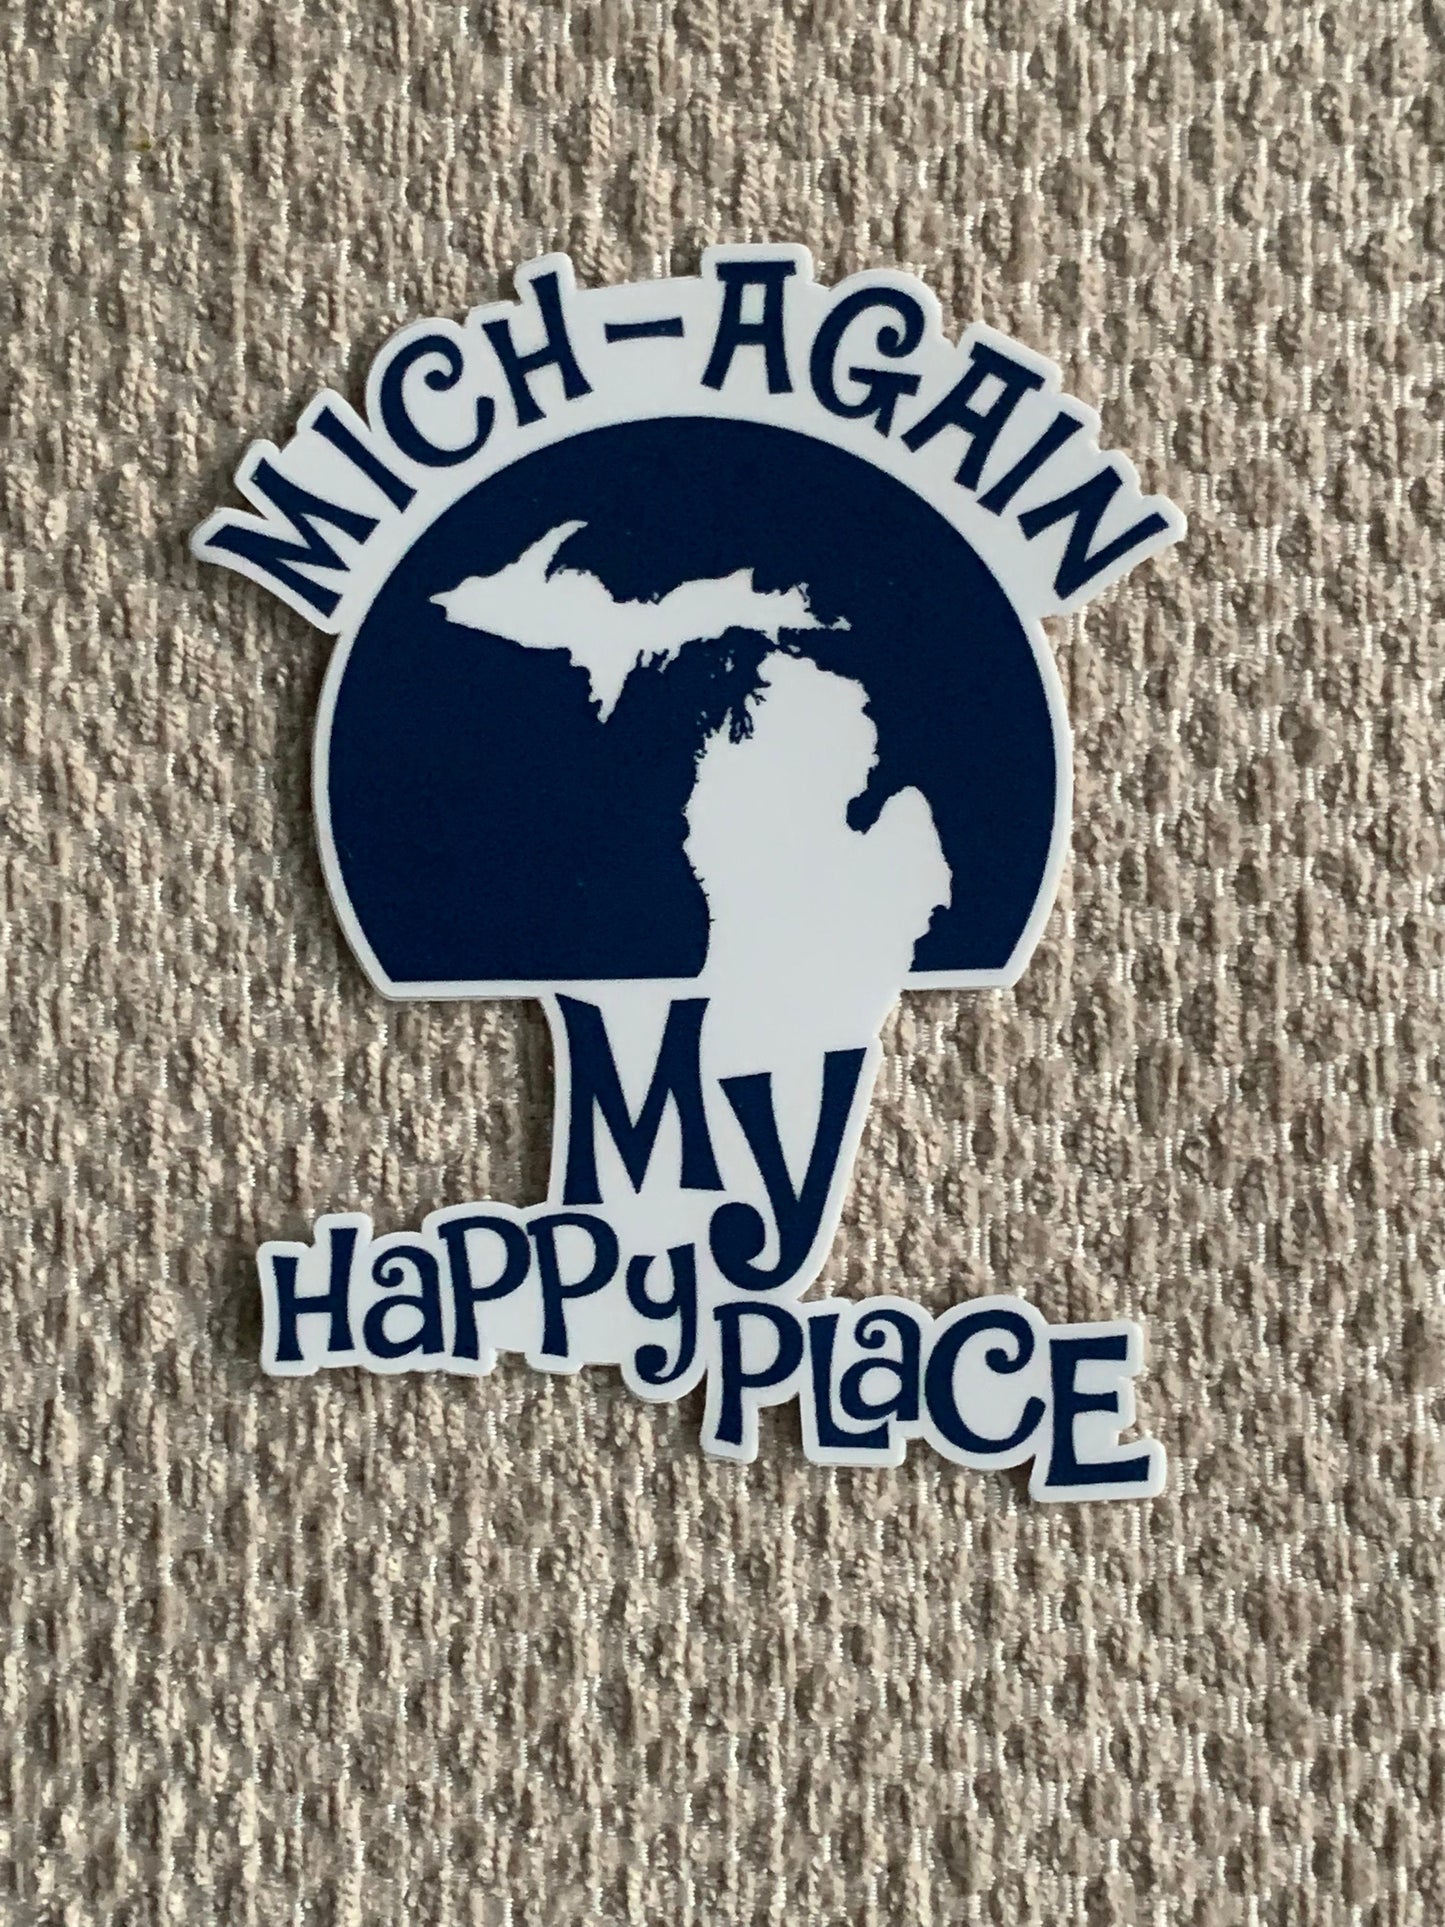 Mich-again My Happy Place Vinyl Sticker, Vinyl Decal, Laptop Sticker, Michigan Sticker, Michigan gift,